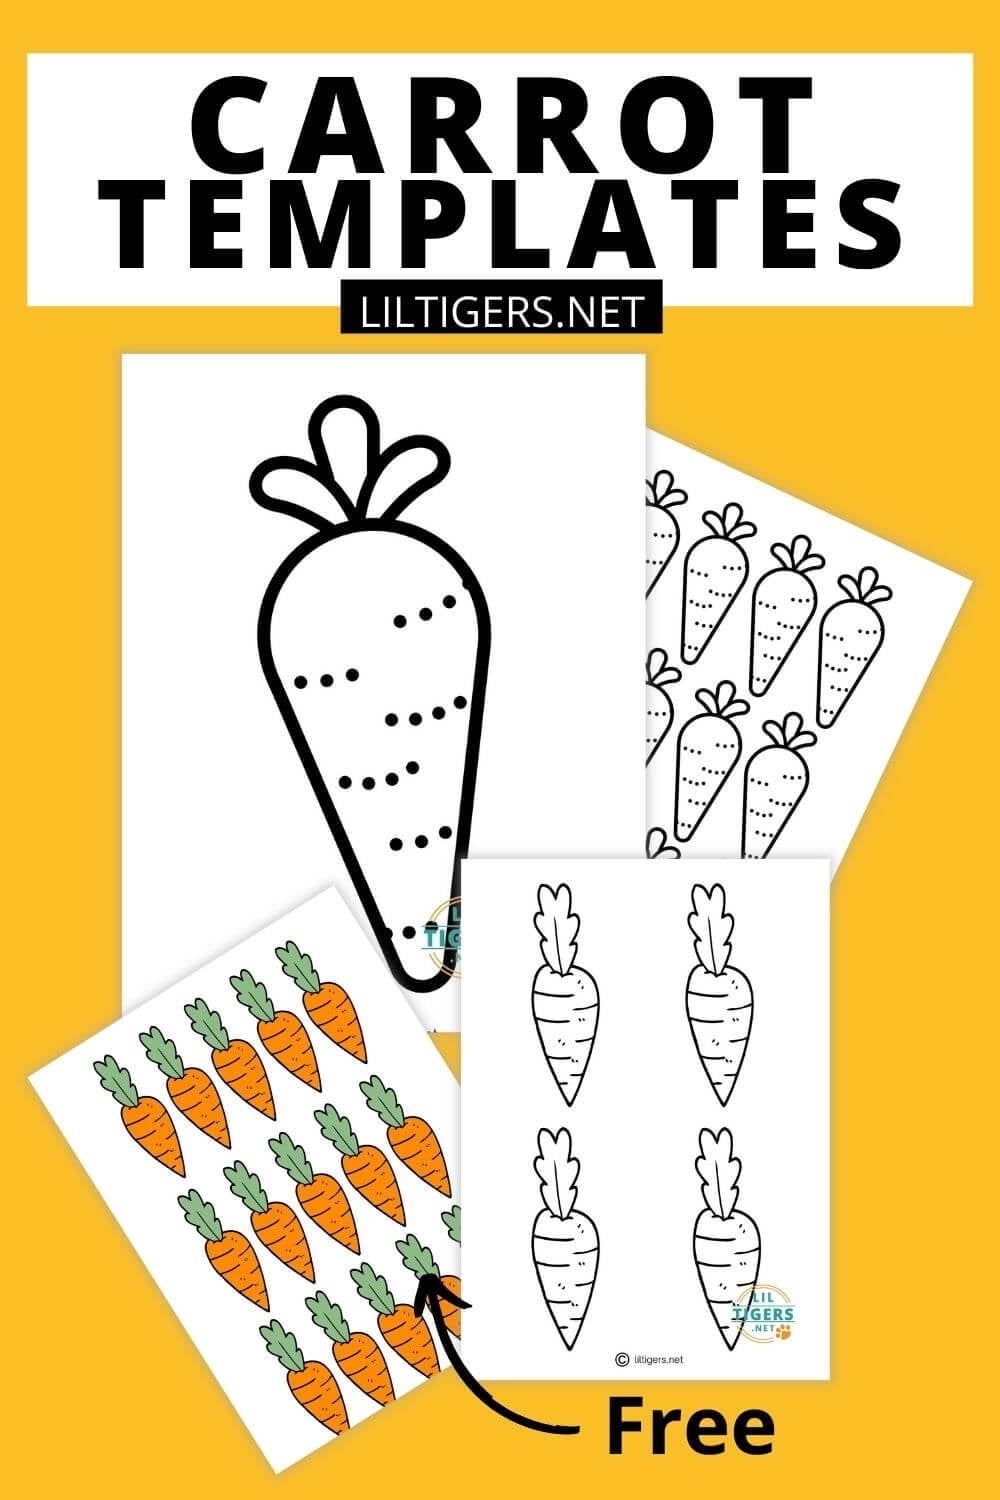 Free Printable Carrot Templates Lil Tigers Lil Tigers